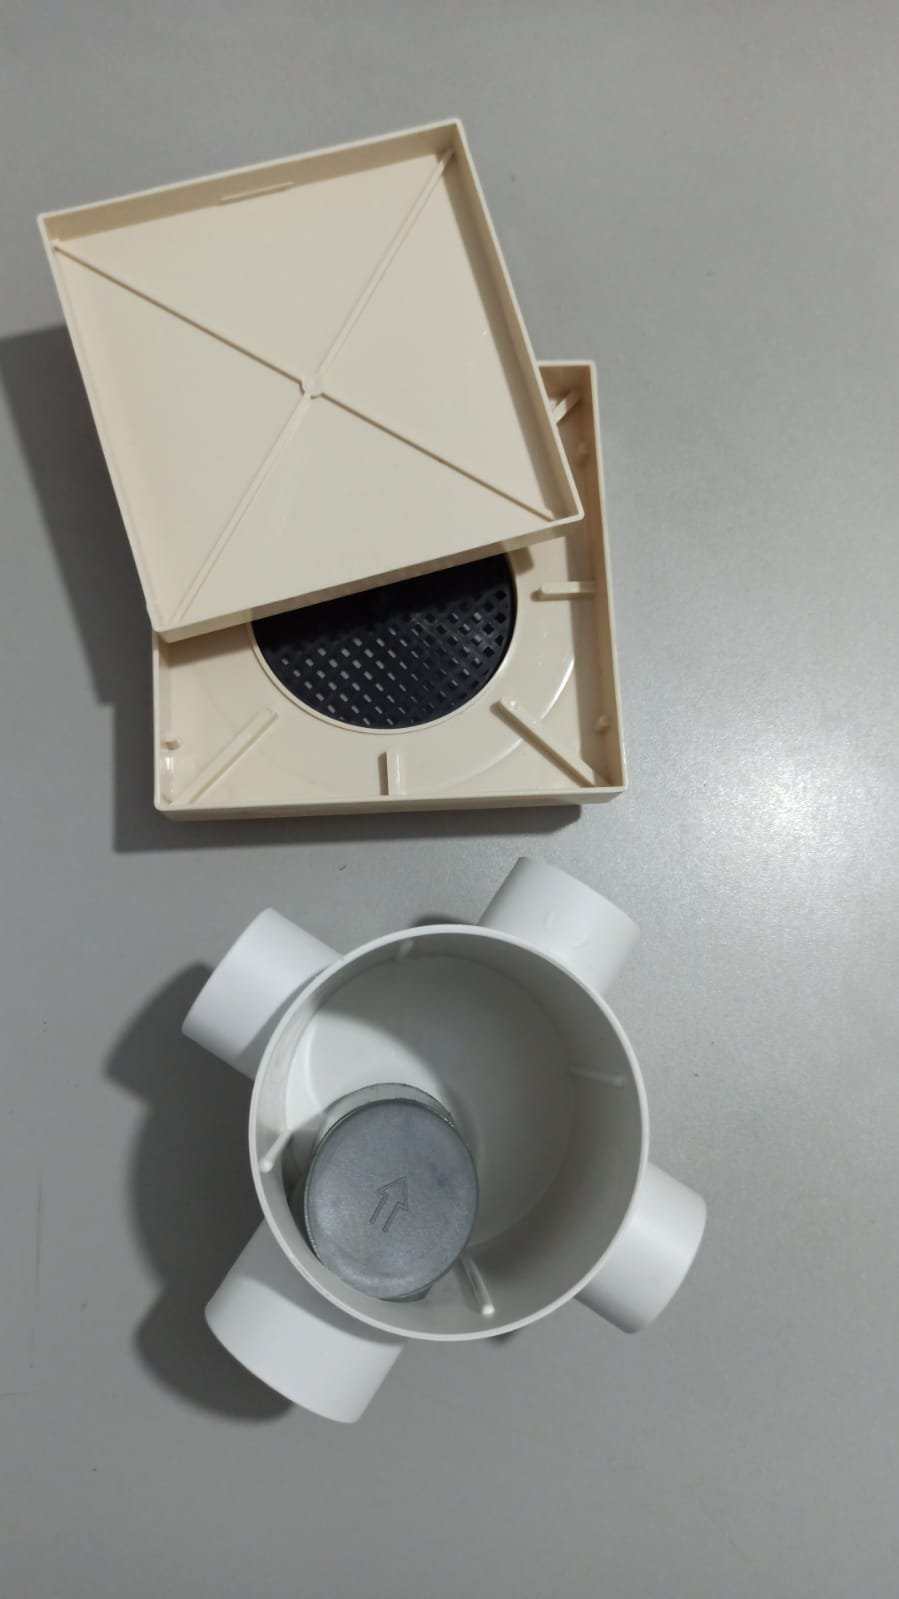 Ralo Invisível Sifonado 15x15 Bege Banheiro modelo Porcelanato Colar Piso com Caixa Sifonada 100 - F - 4